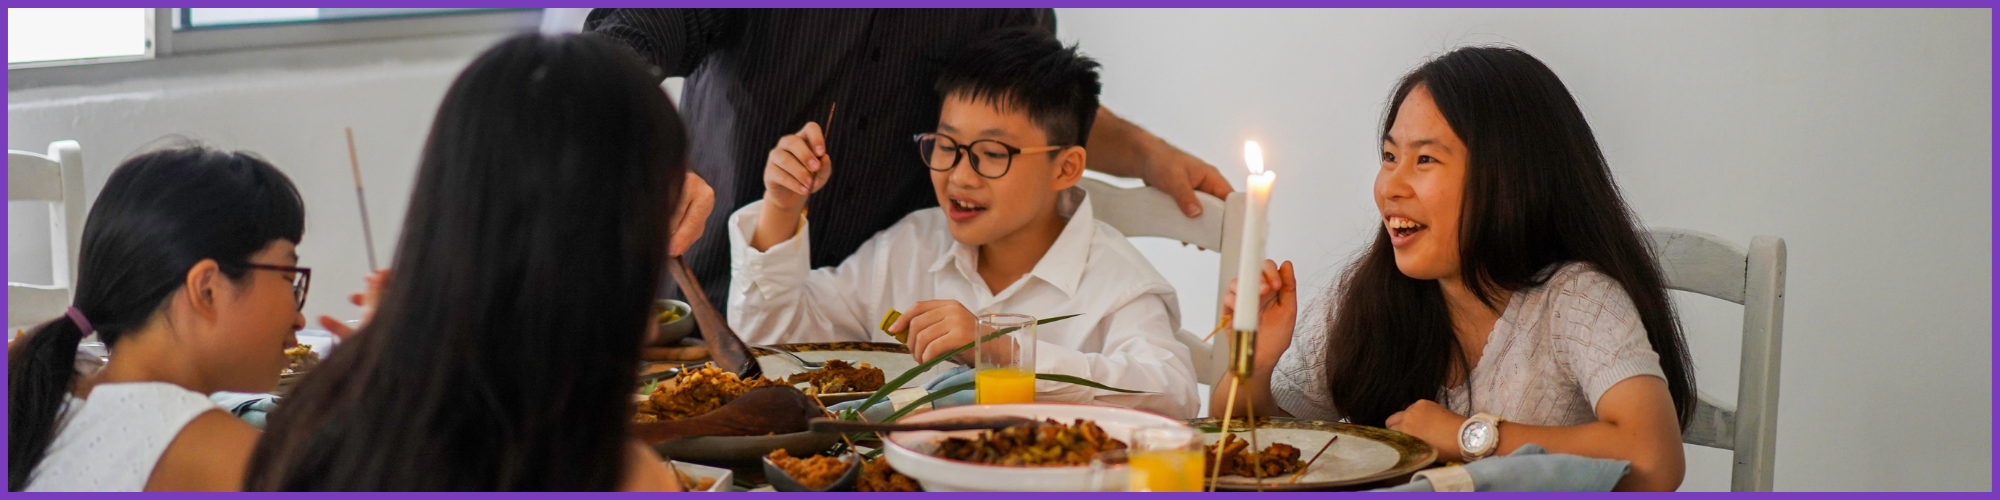 Asian Family eating dinner together